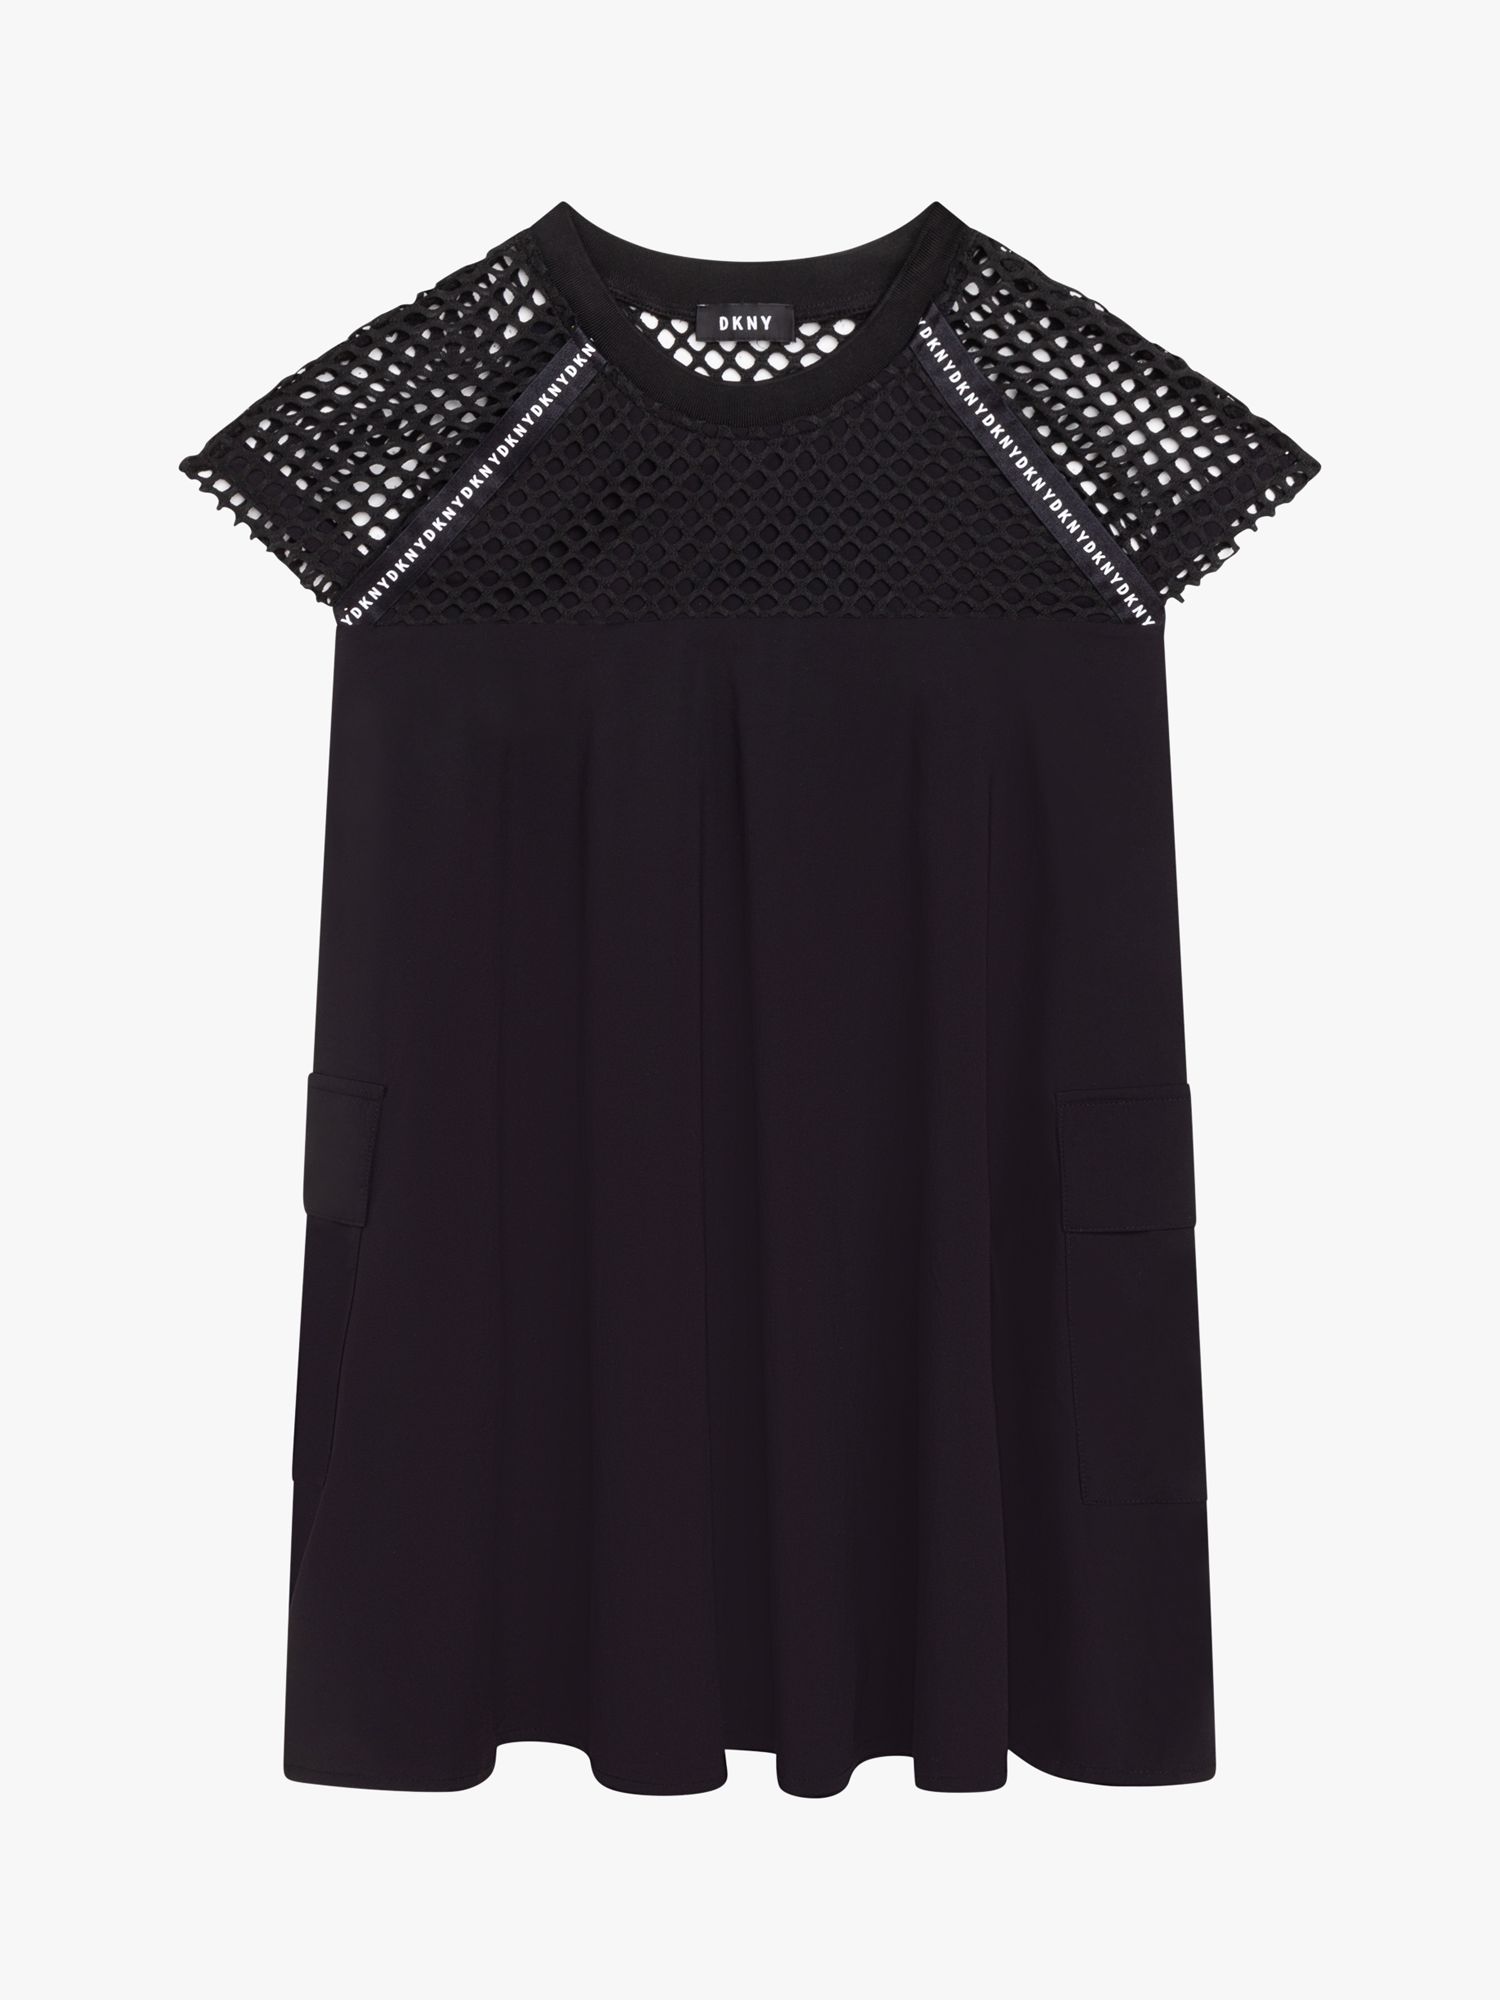 DKNY Kids' Mesh Sleeve Dress, Black at John Lewis & Partners